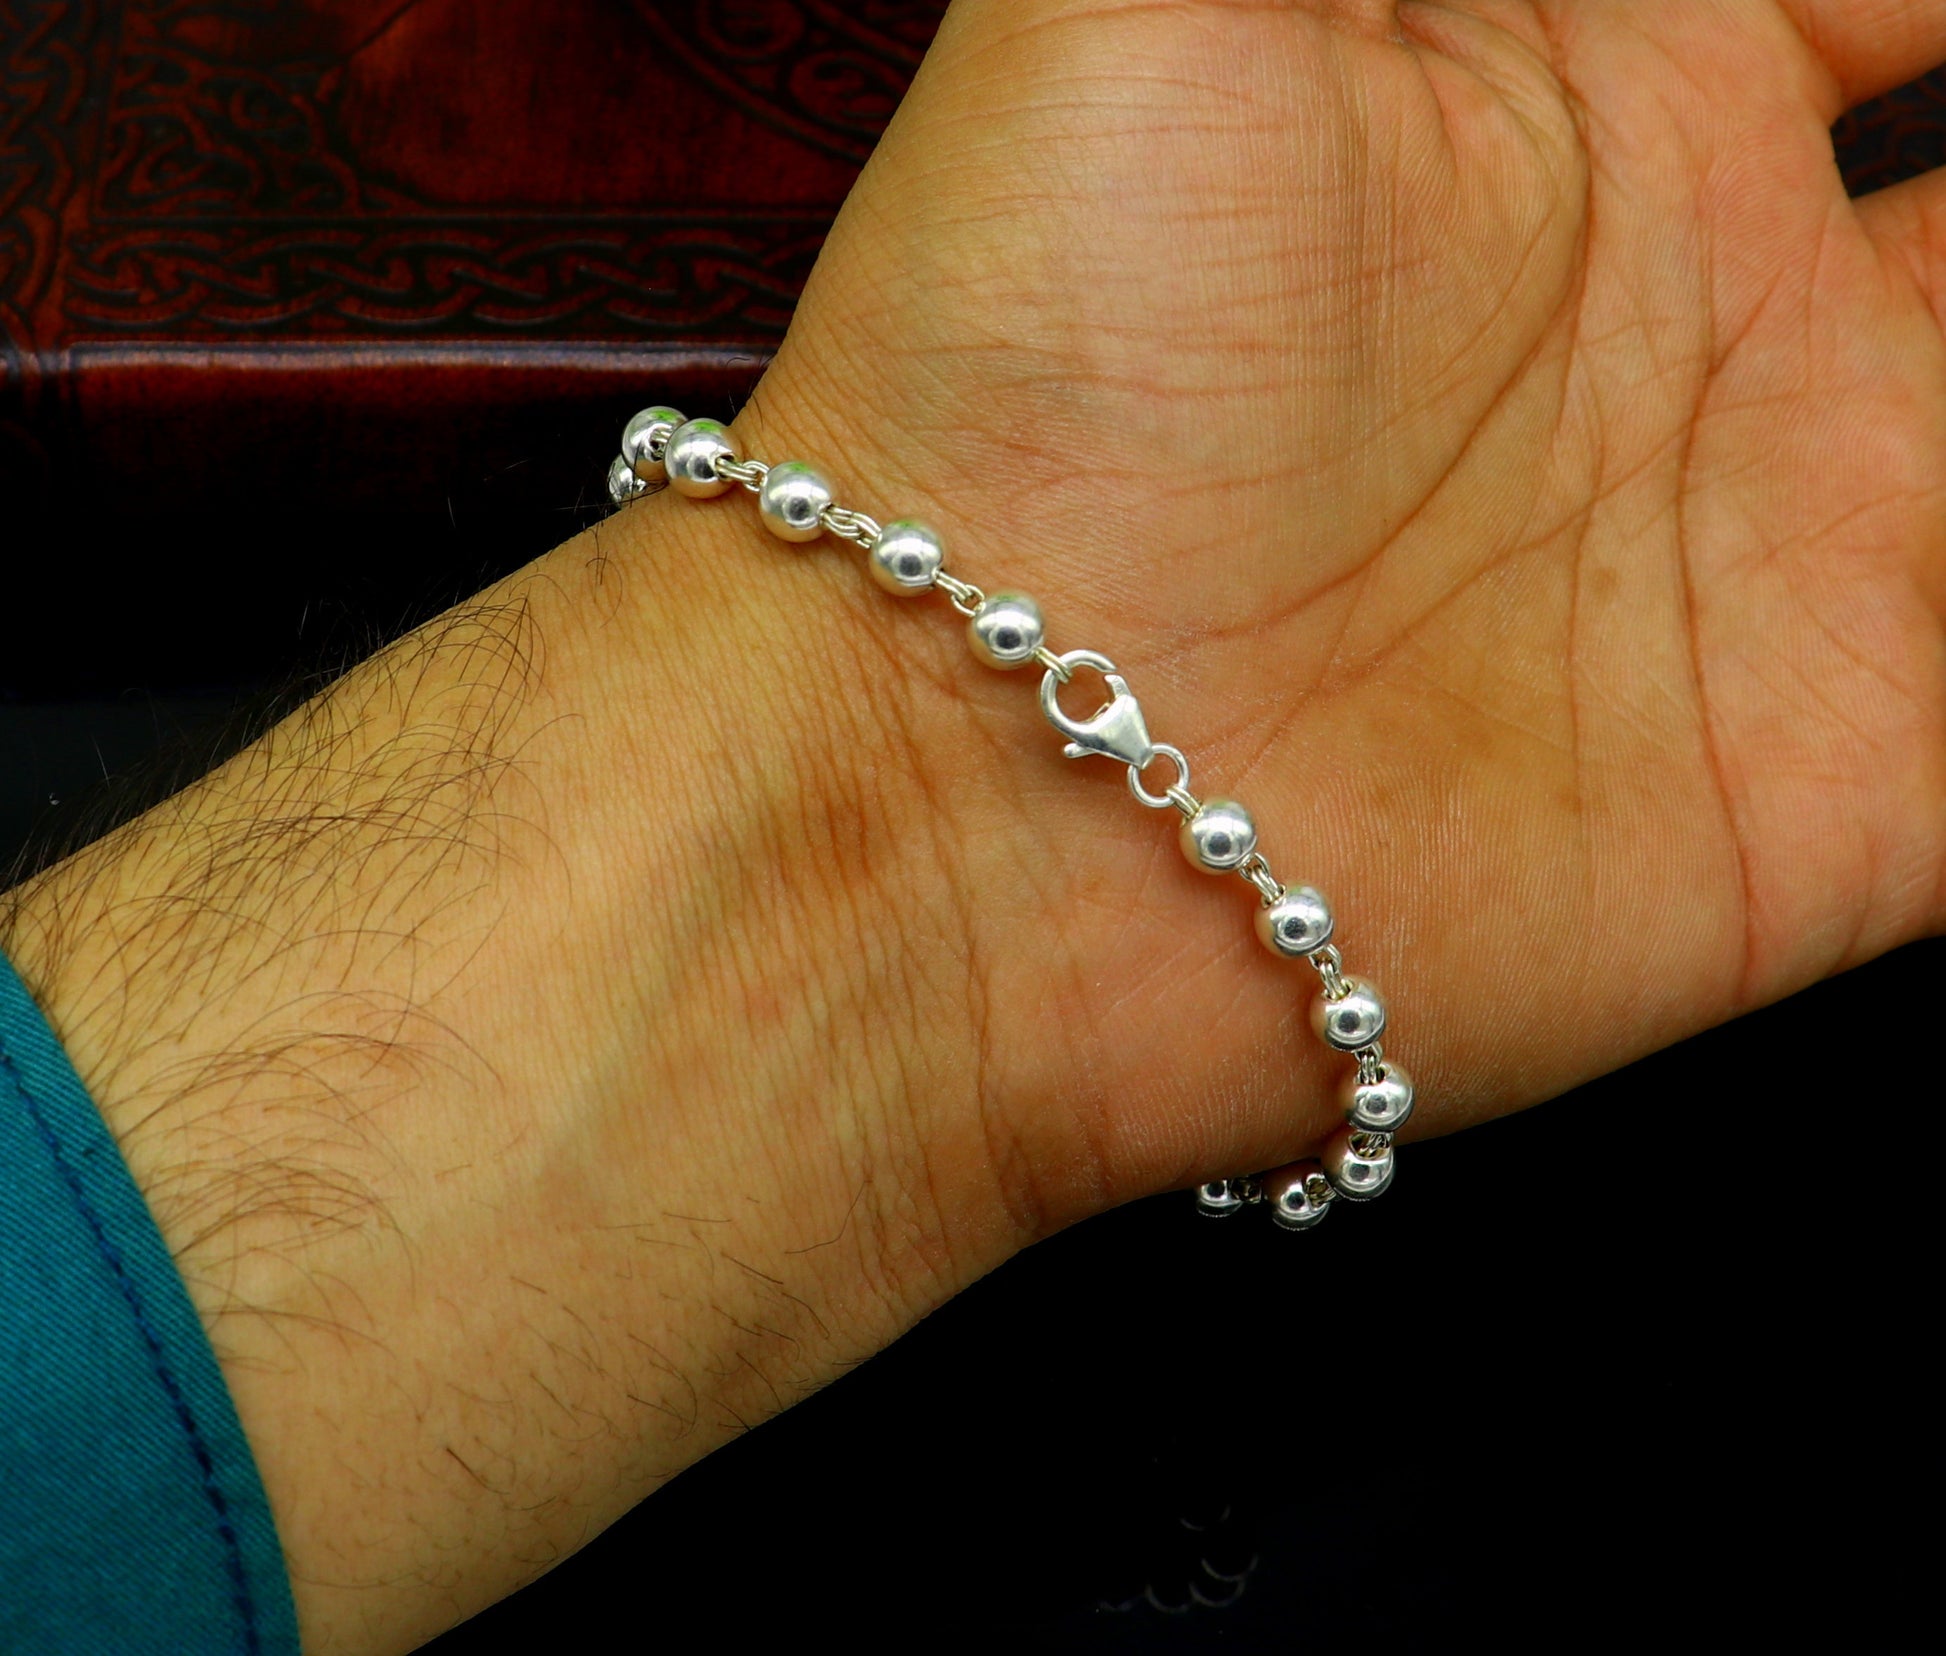 925 sterling silver handmade 5.5 mm round beads balls unisex bracelet, fabulous customized 8 inches long beaded bracelet stylish gift sbr211 - TRIBAL ORNAMENTS